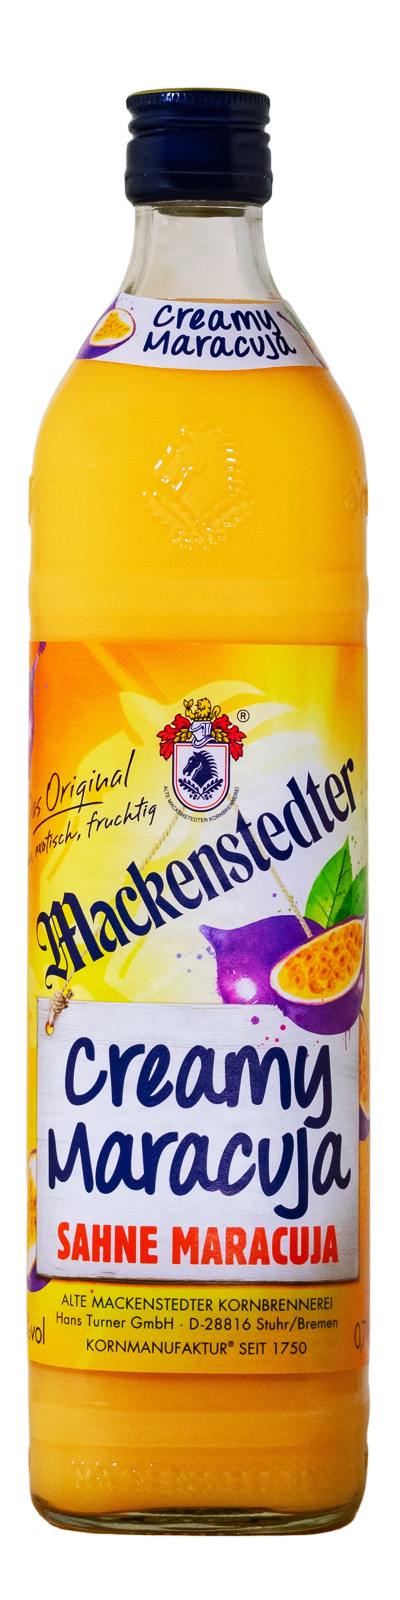 Mackenstedter Creamy Maracuja - 0,7L 15% vol